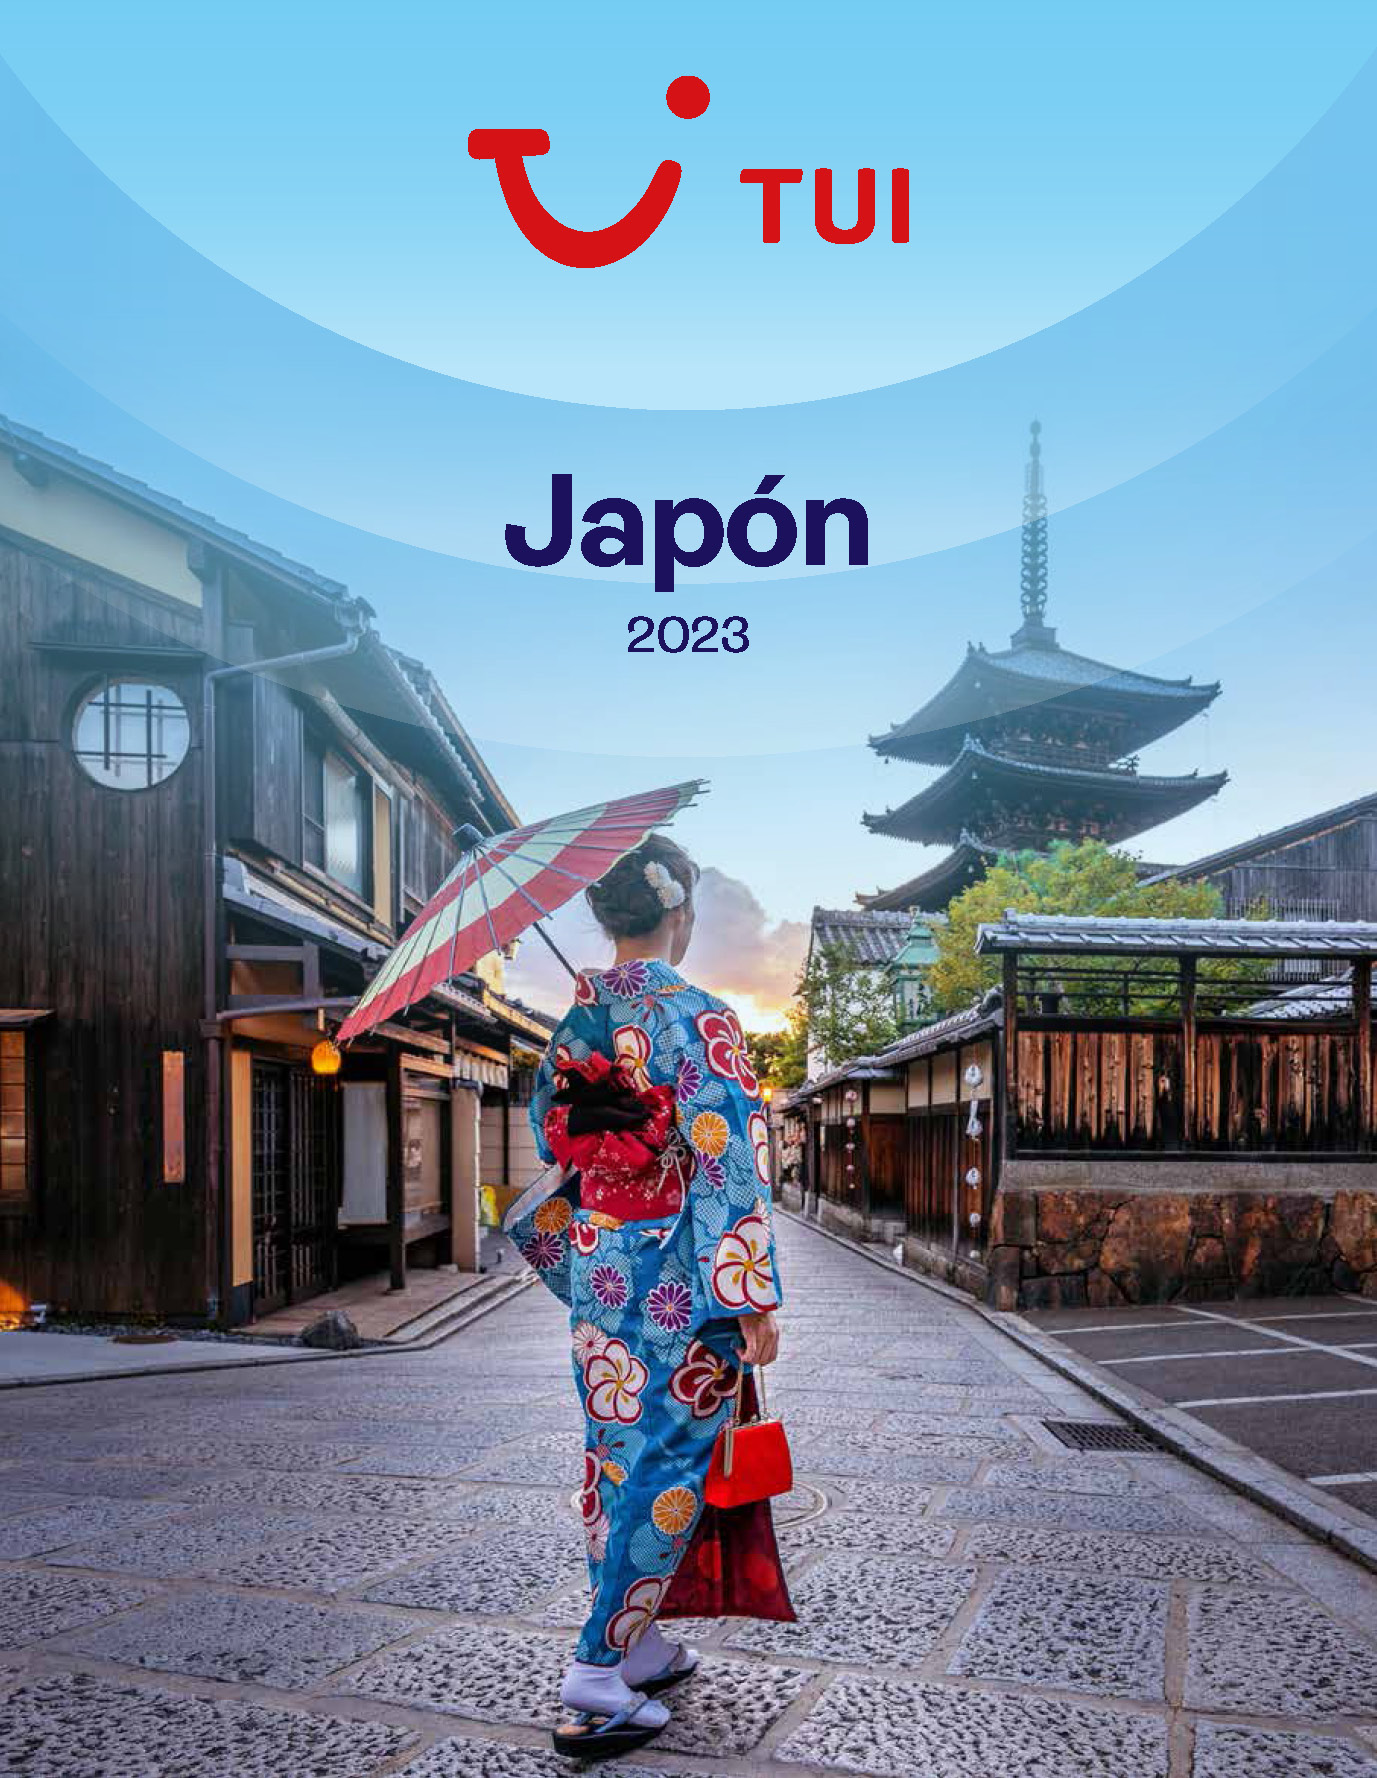 Catalogo TUI Japon 2023